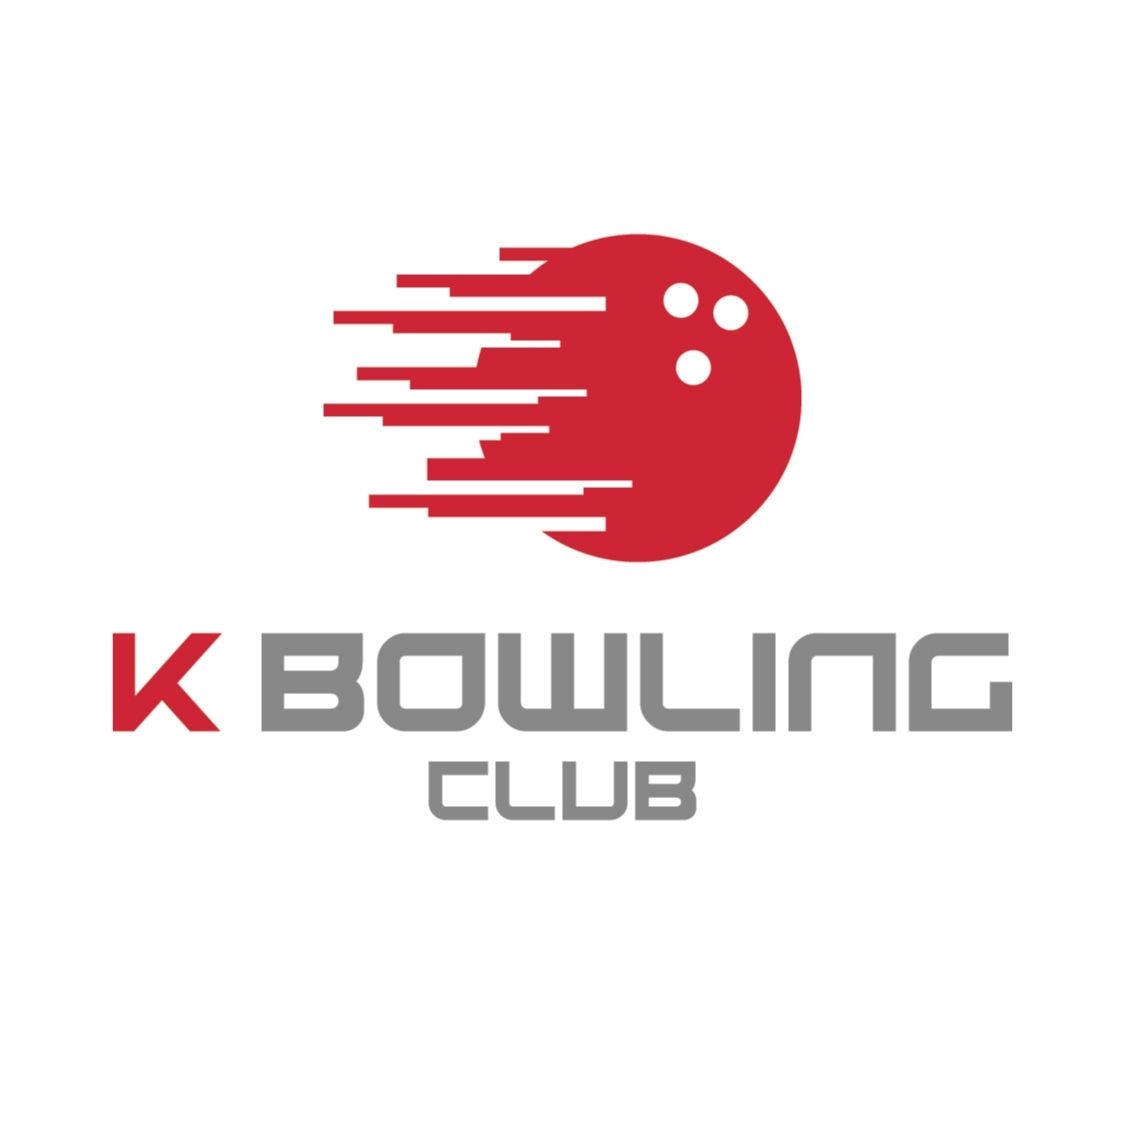 K Bowling Club Logo.jpg